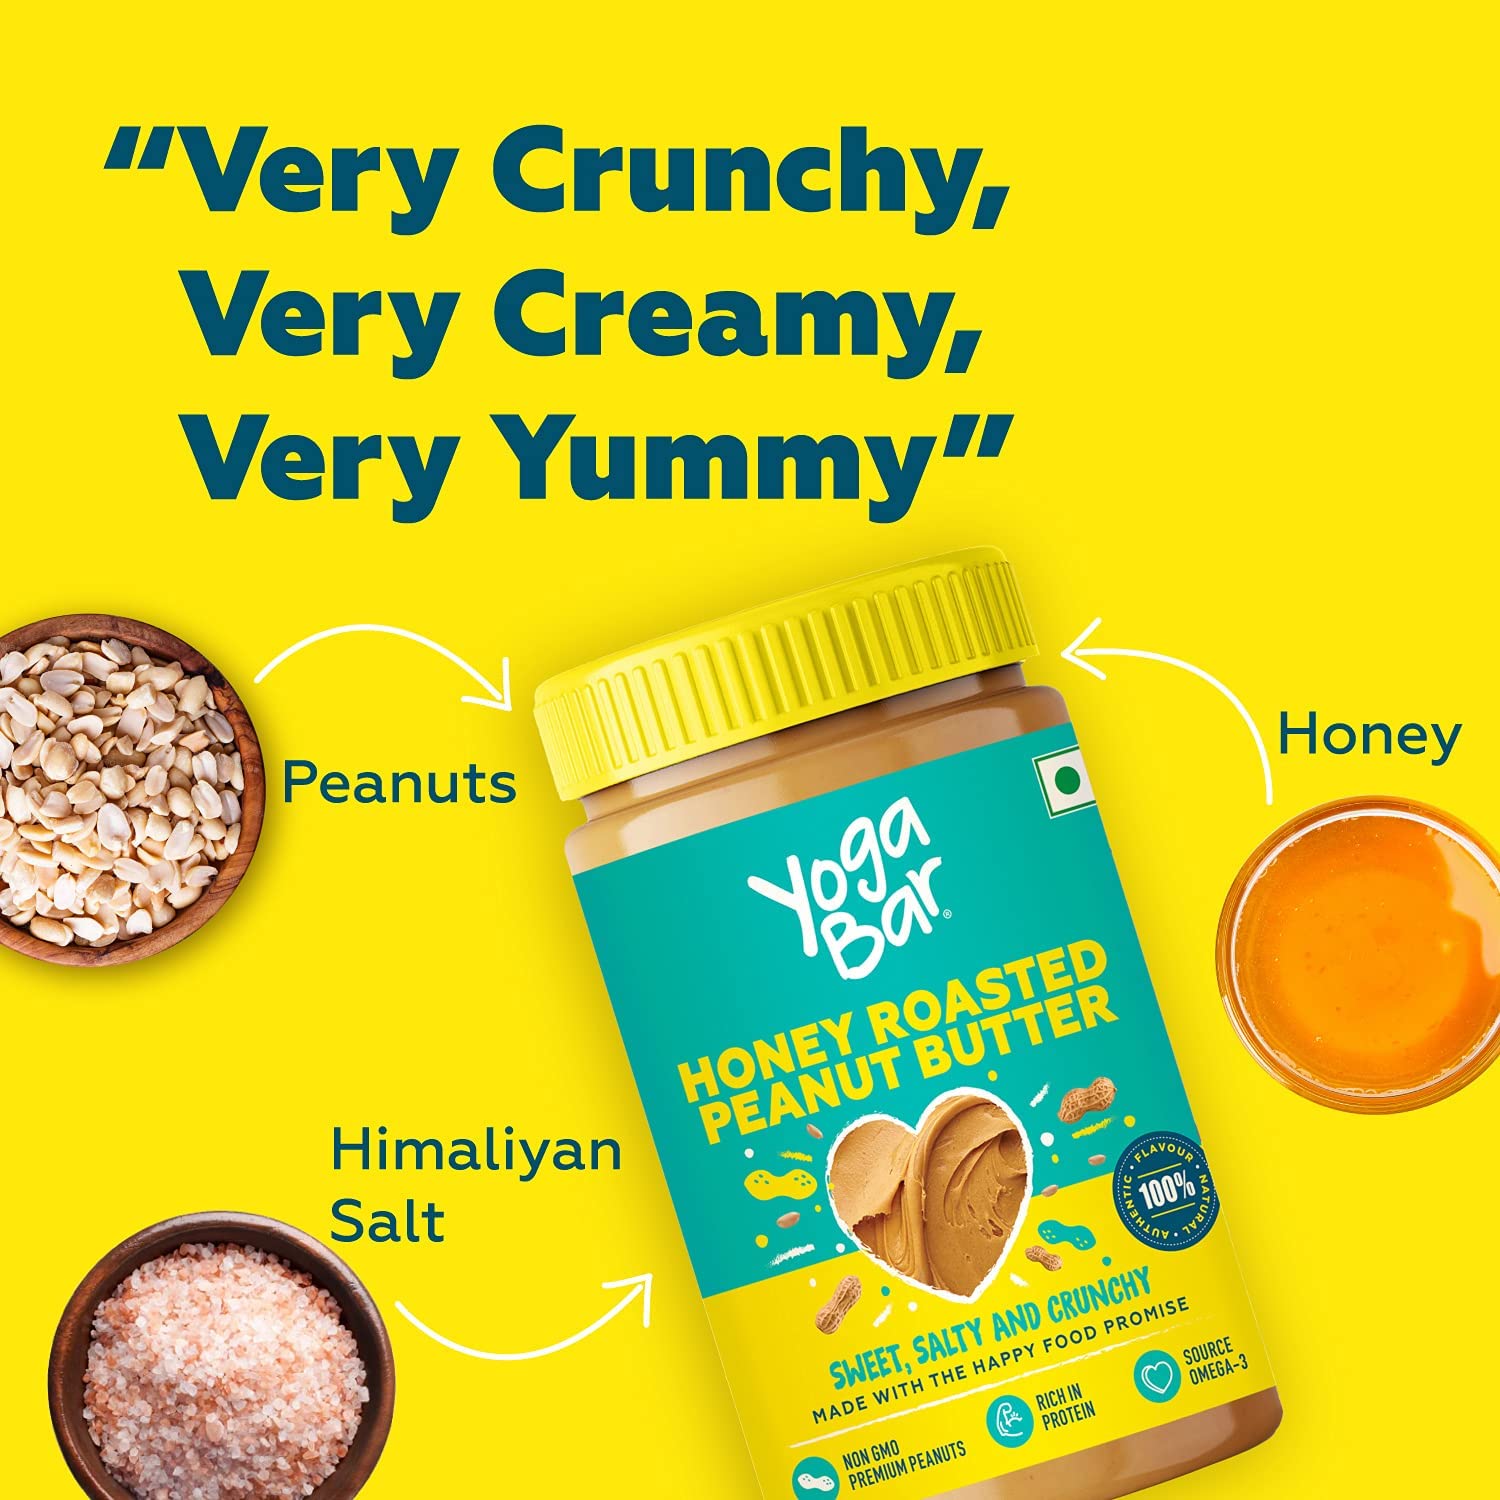 Buy Yogabar Crunchy Dark Chocolate Peanut Butter 1kg (Pack of 2